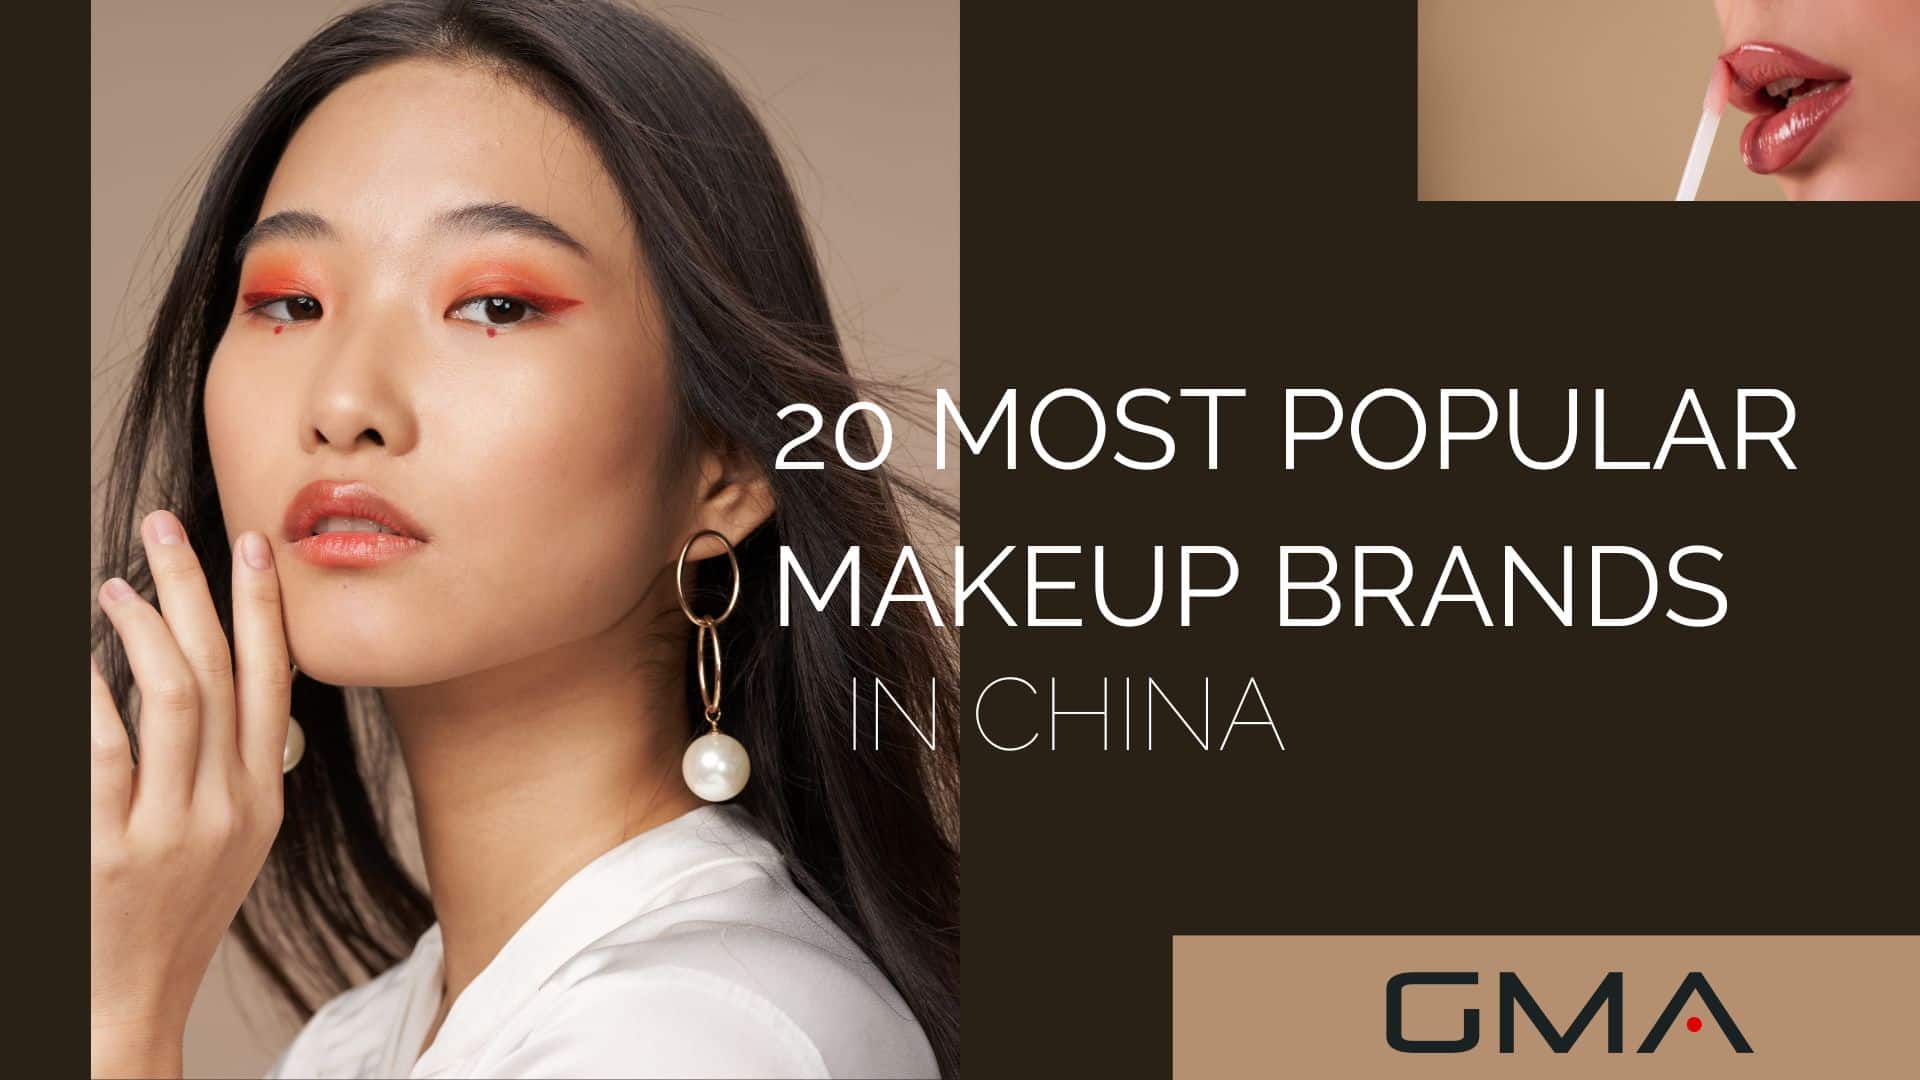 Top 10 Hottest Luxury Makeup Brands—According To Landys Chemist